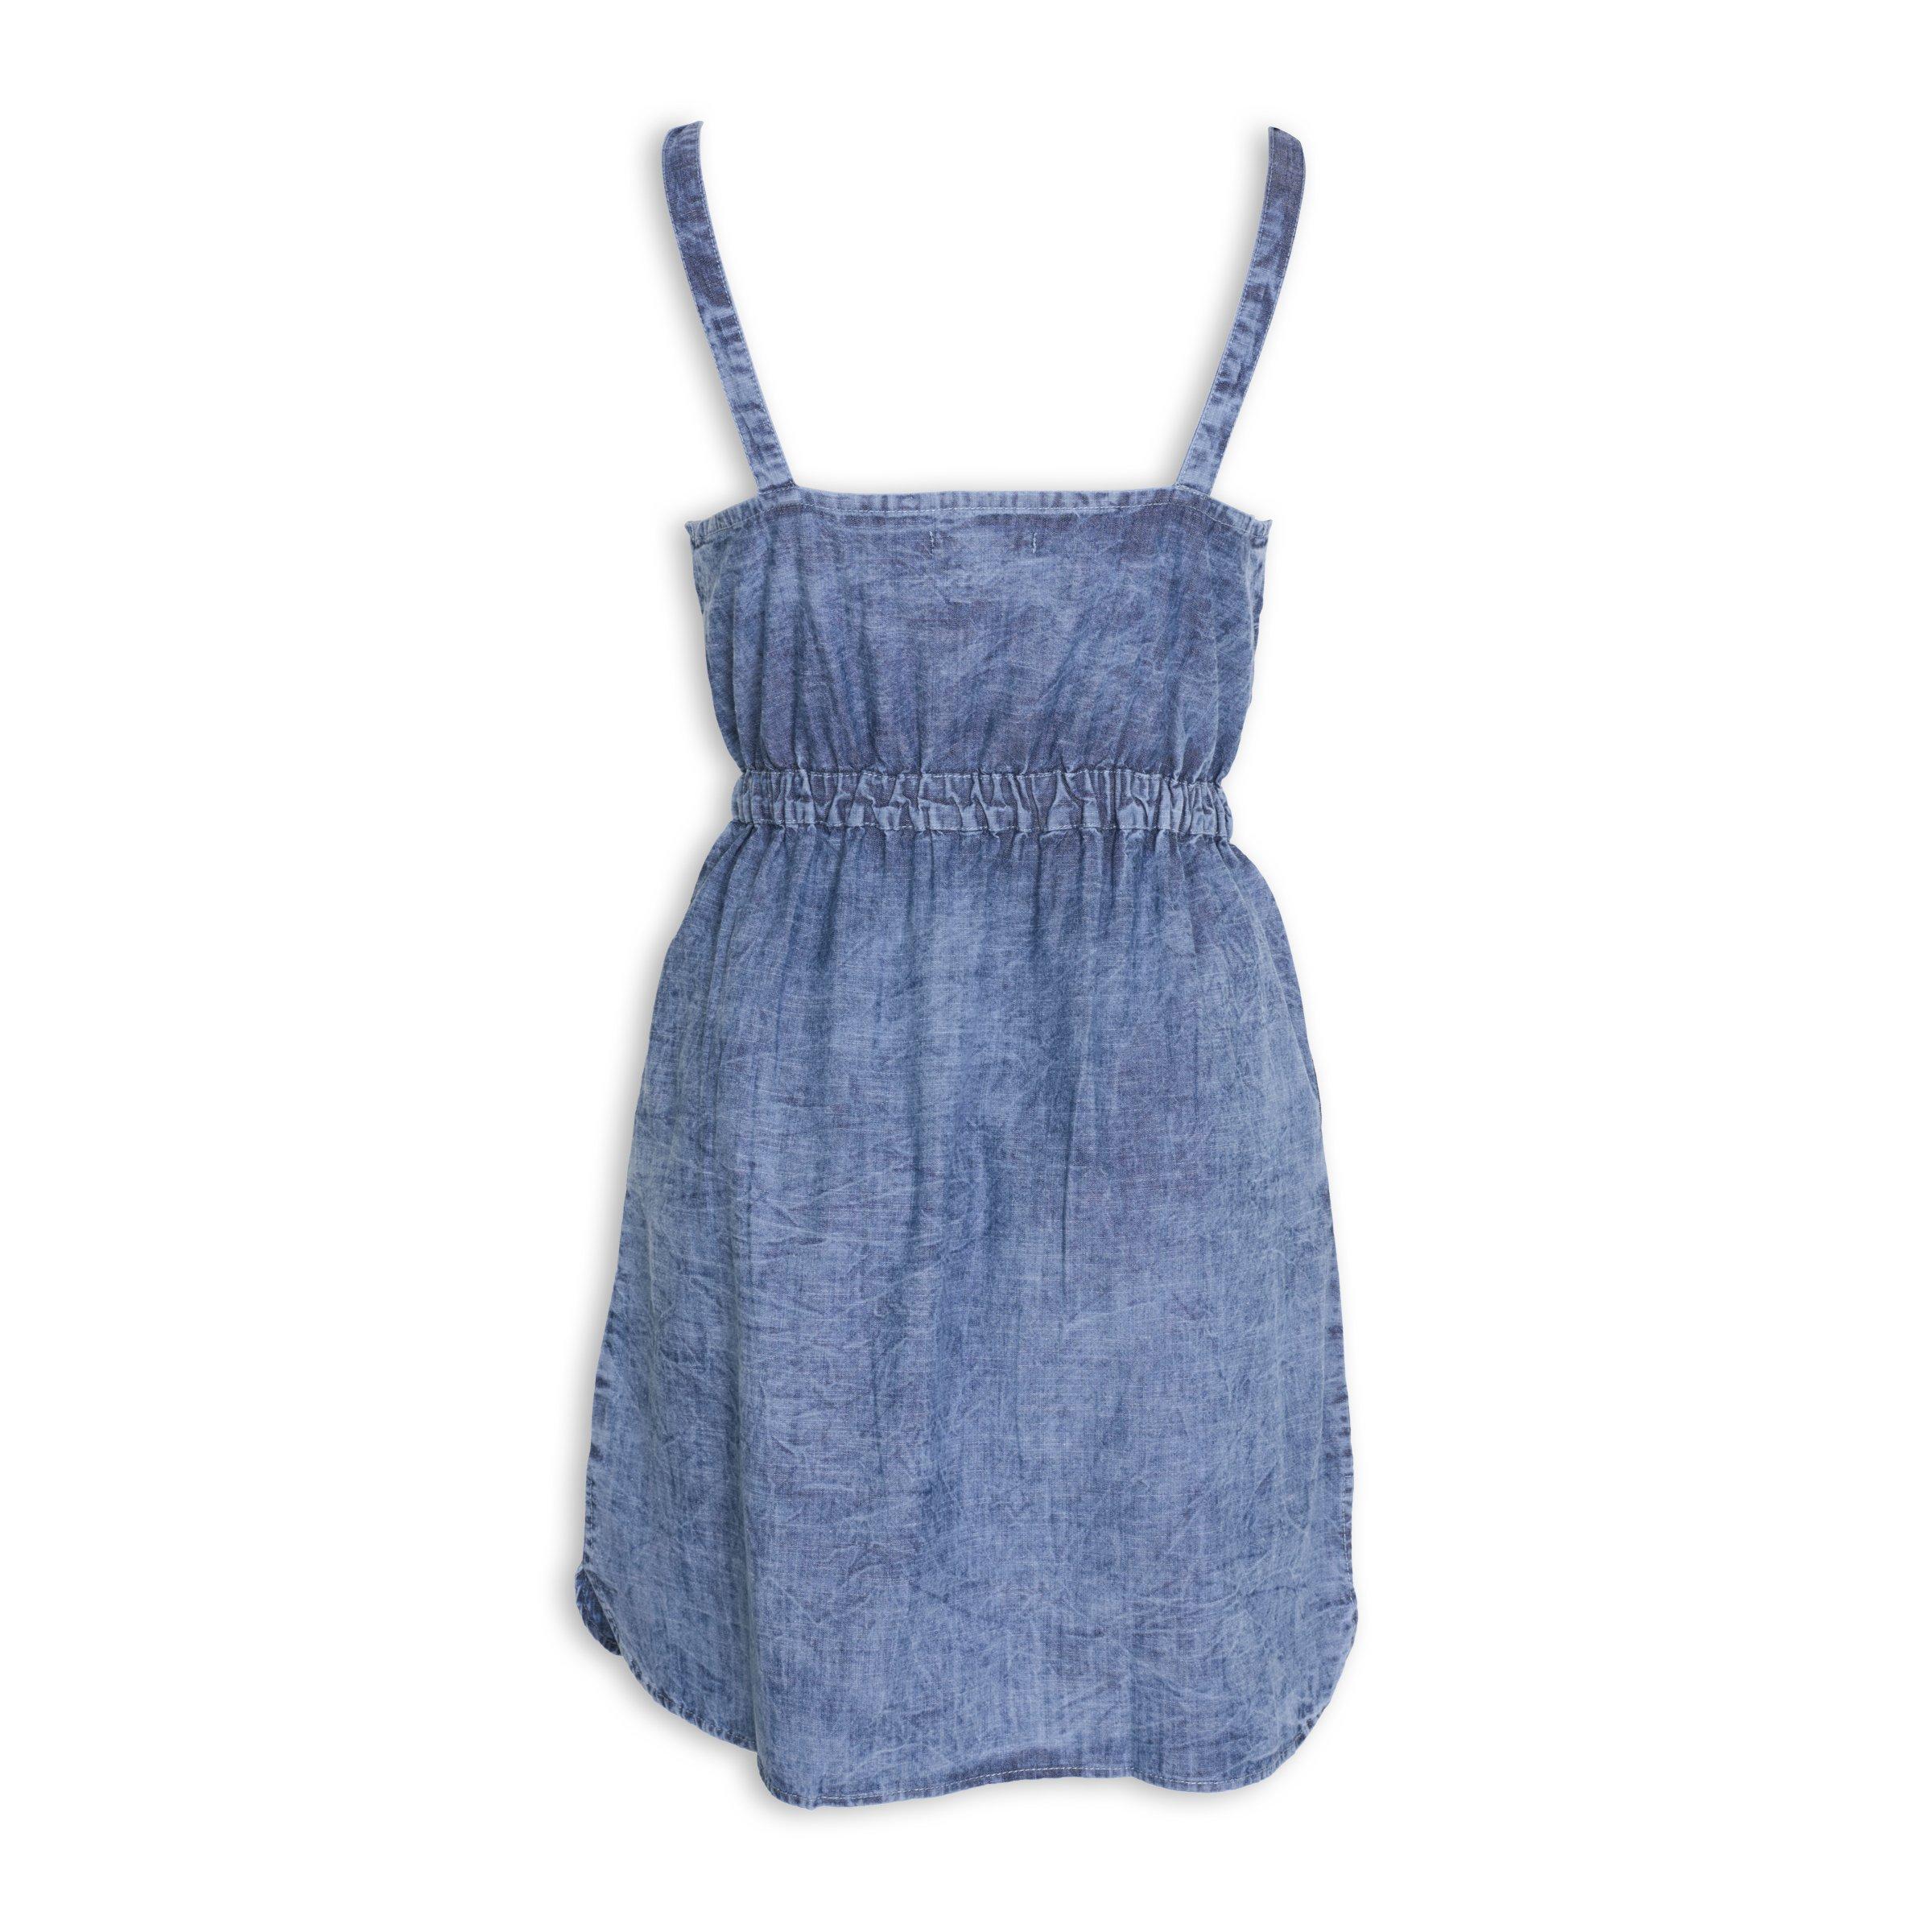 Hey Betty dress 👗 #VintageDress - Gxubs Vintage Clothing